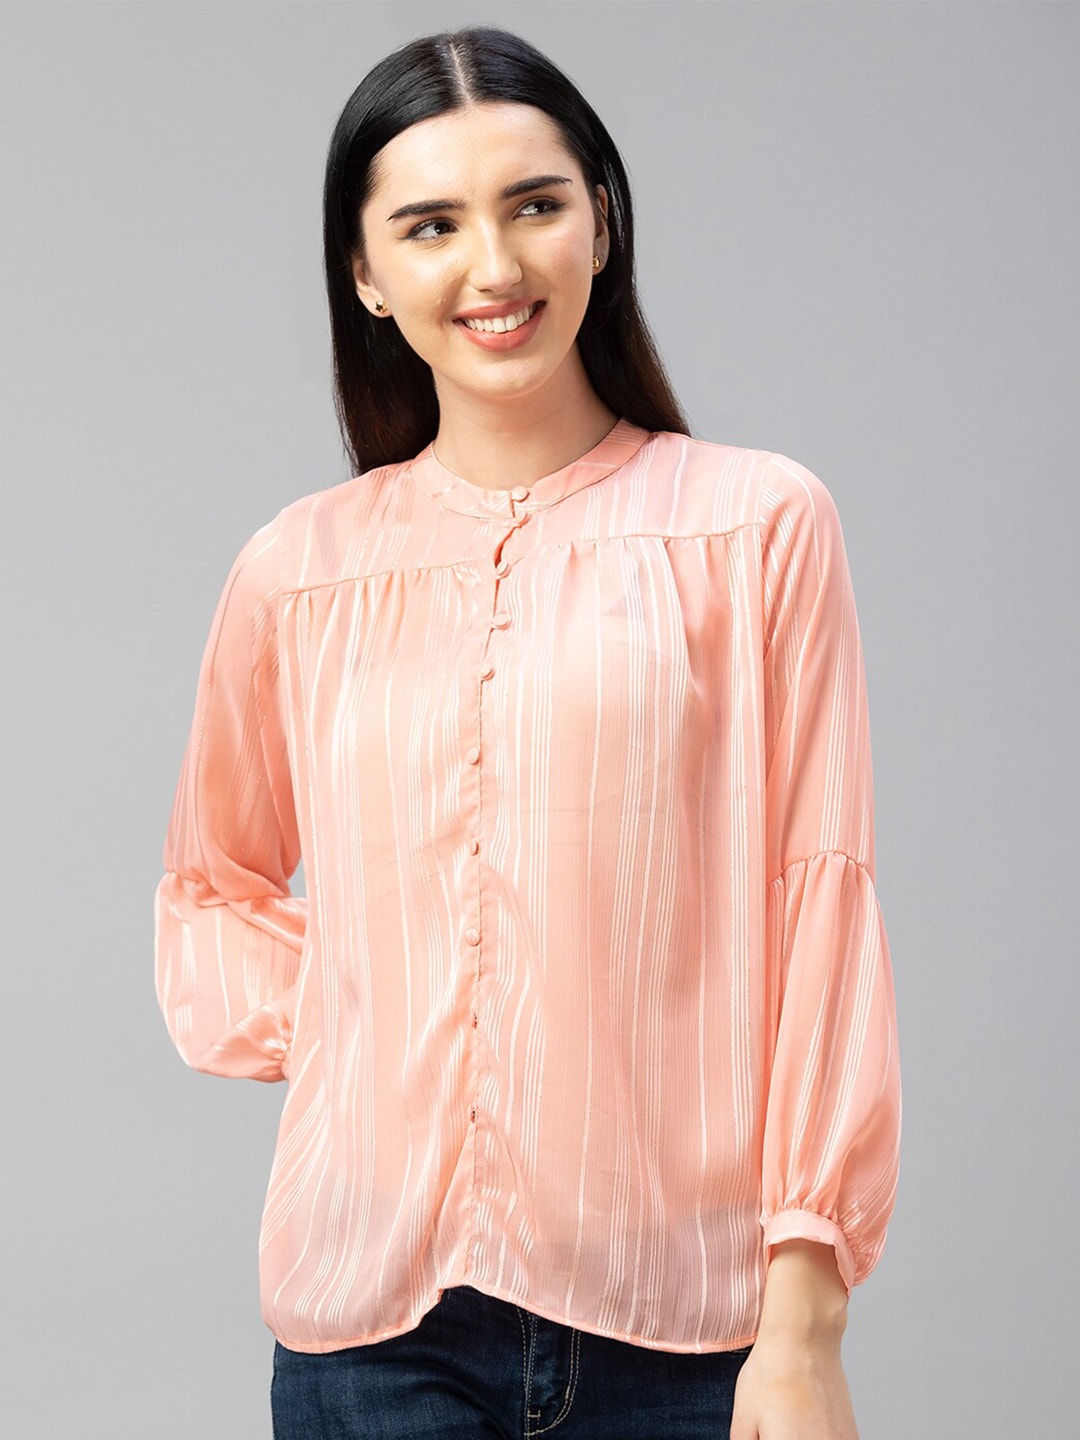 Globus Peach-Coloured Mandarin Collar Georgette Shirt Style Top Price in India